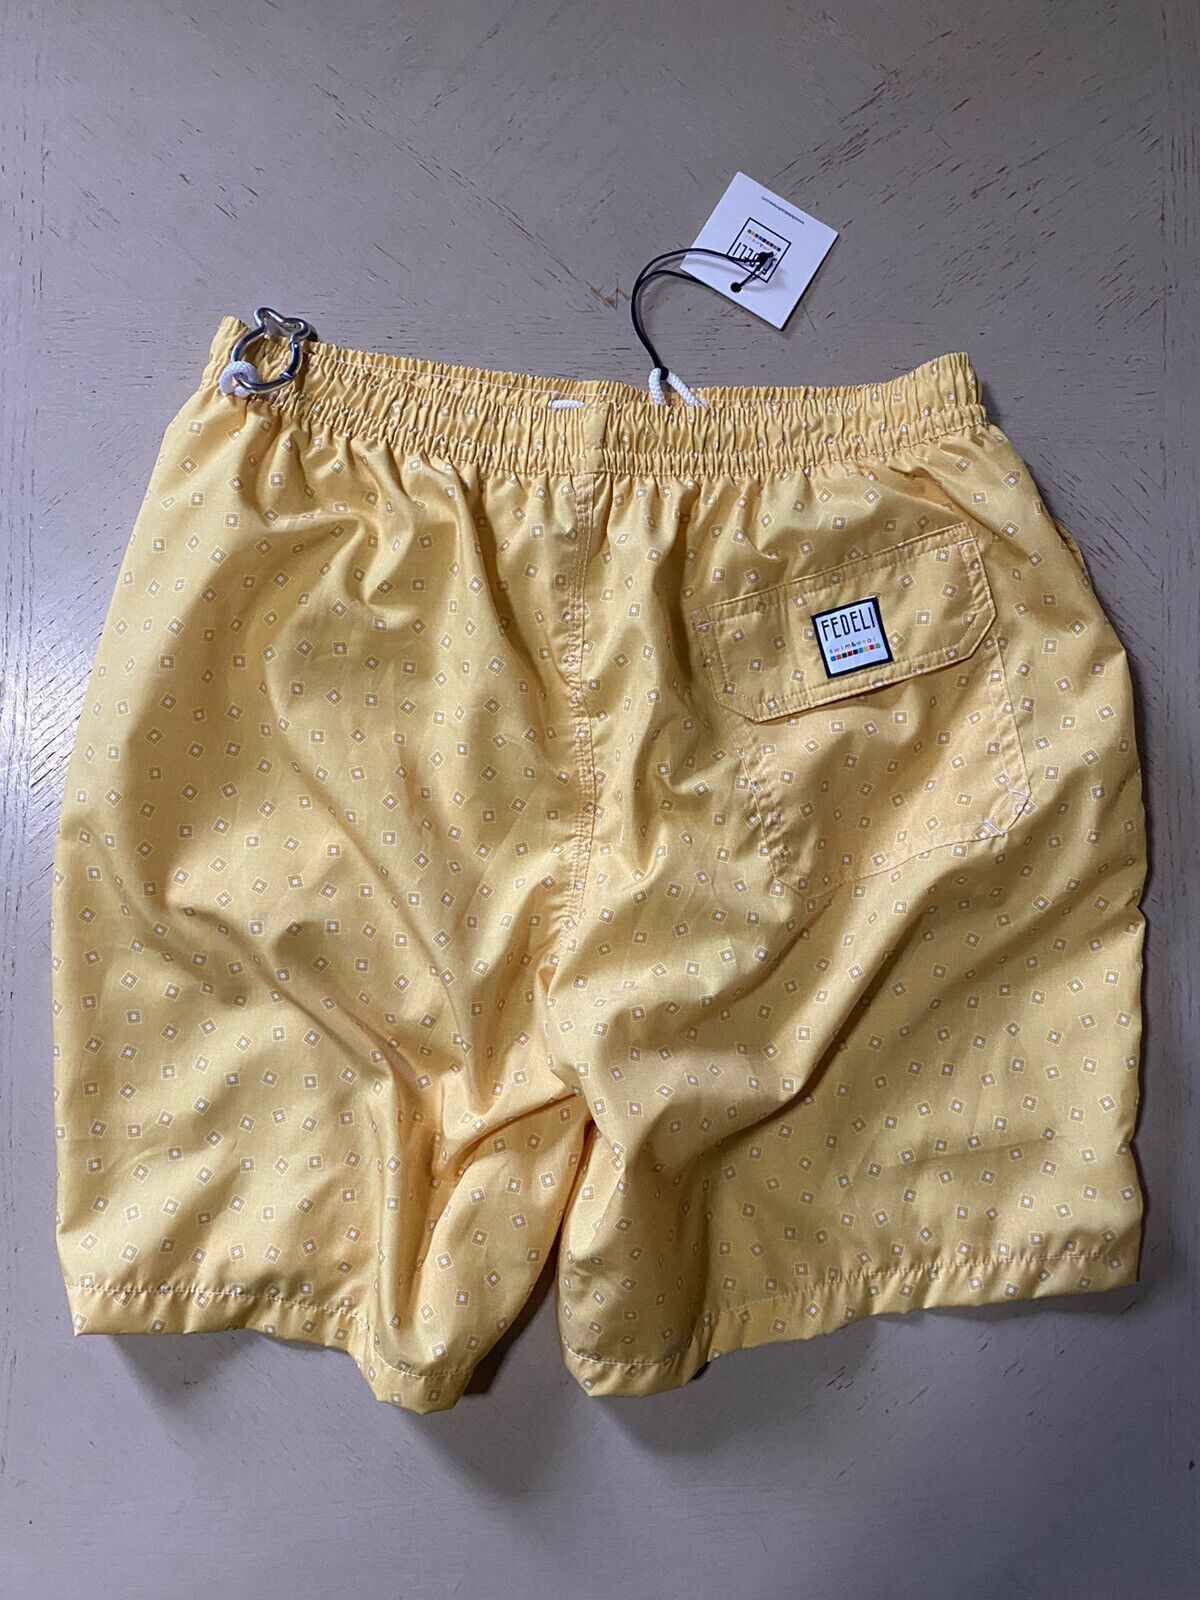 Мужские шорты для плавания NWT Fedeli, желтые, размер XL, Италия